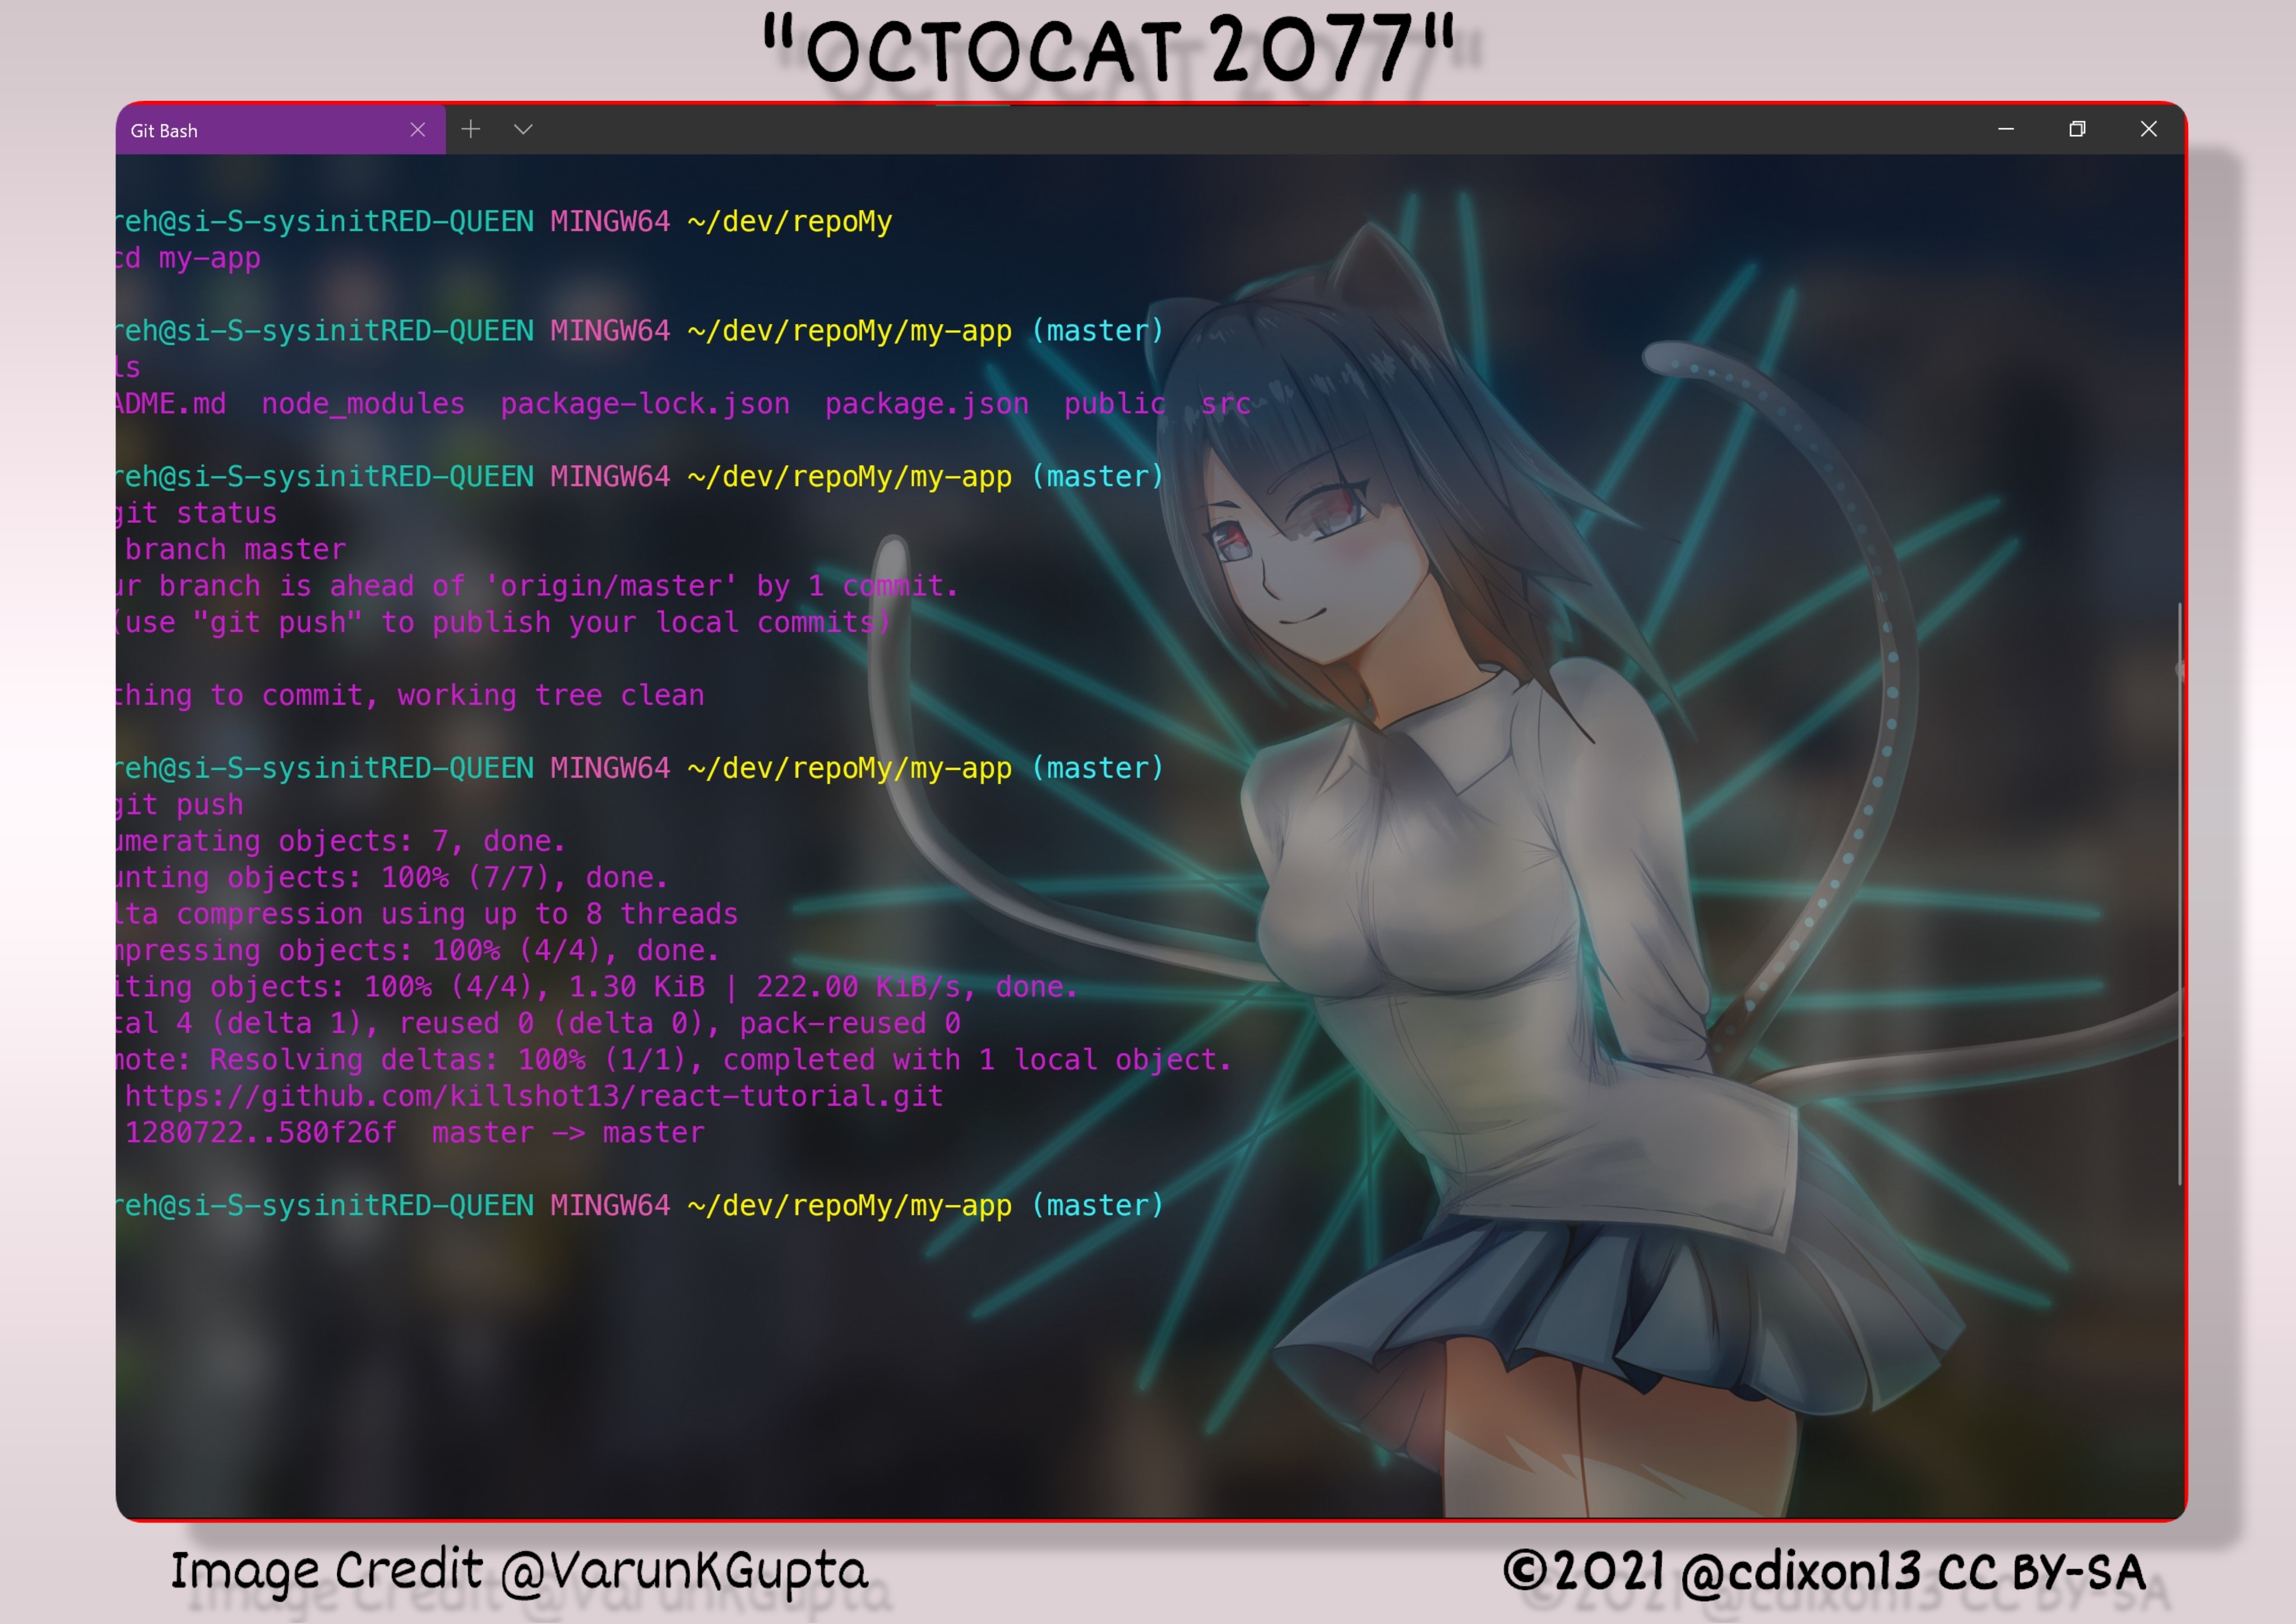 Sample Image of Octocat 2077